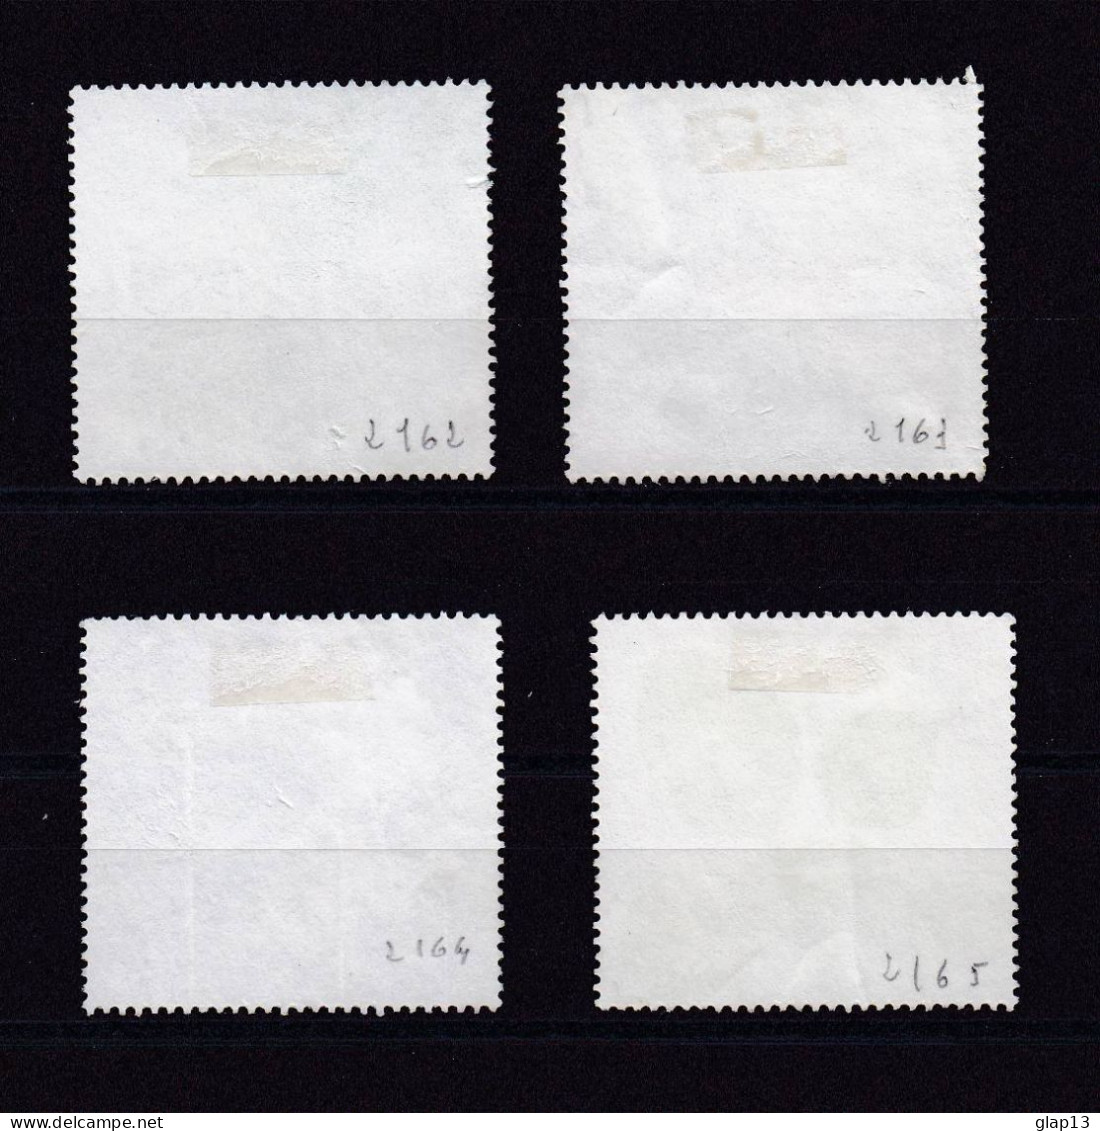 GRANDE-BRETAGNE 2000 TIMBRE N°2162/65 OBLITERE NOUVEAU MILLENAIRE - Used Stamps